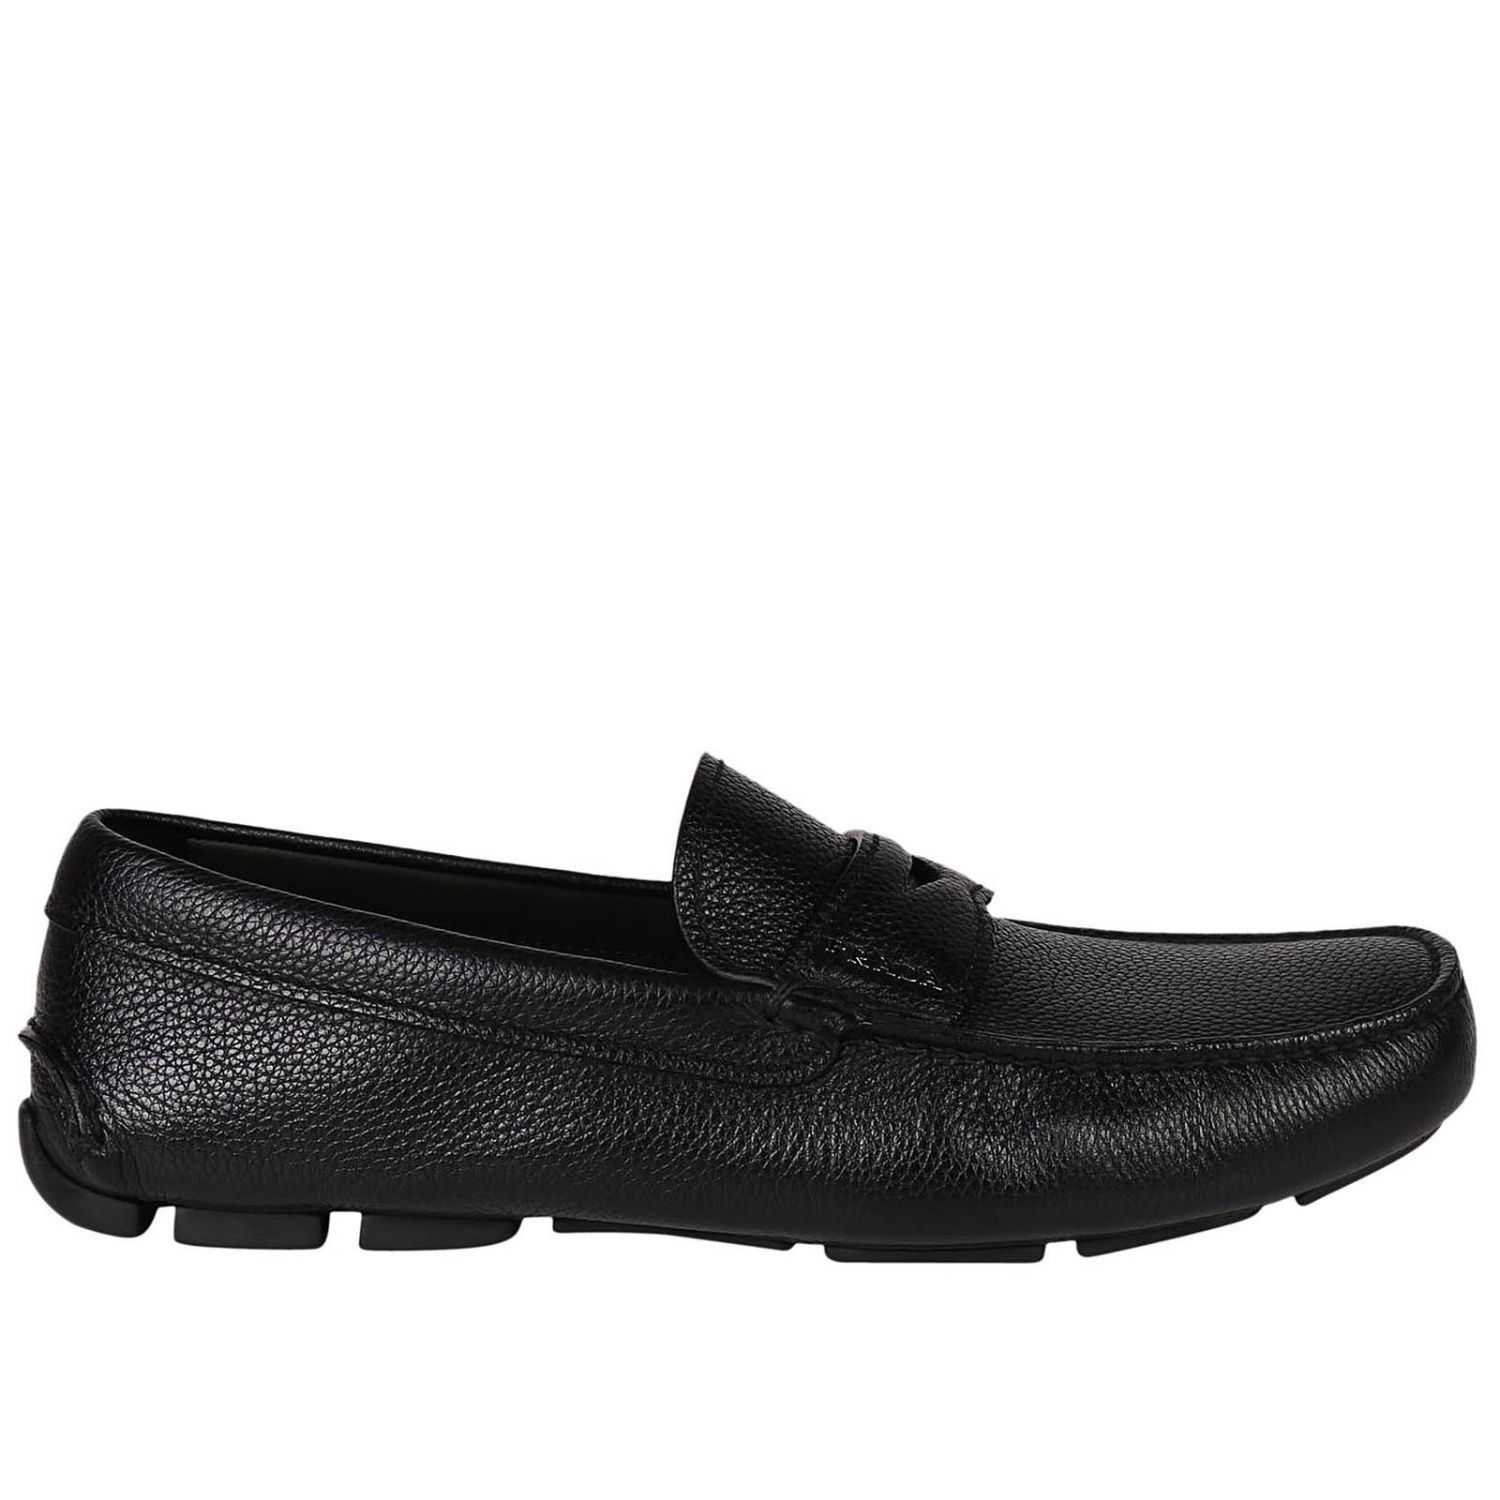 Shoes men Prada | Loafers Prada Men Black | Loafers Prada 2DD001 3F0P ...